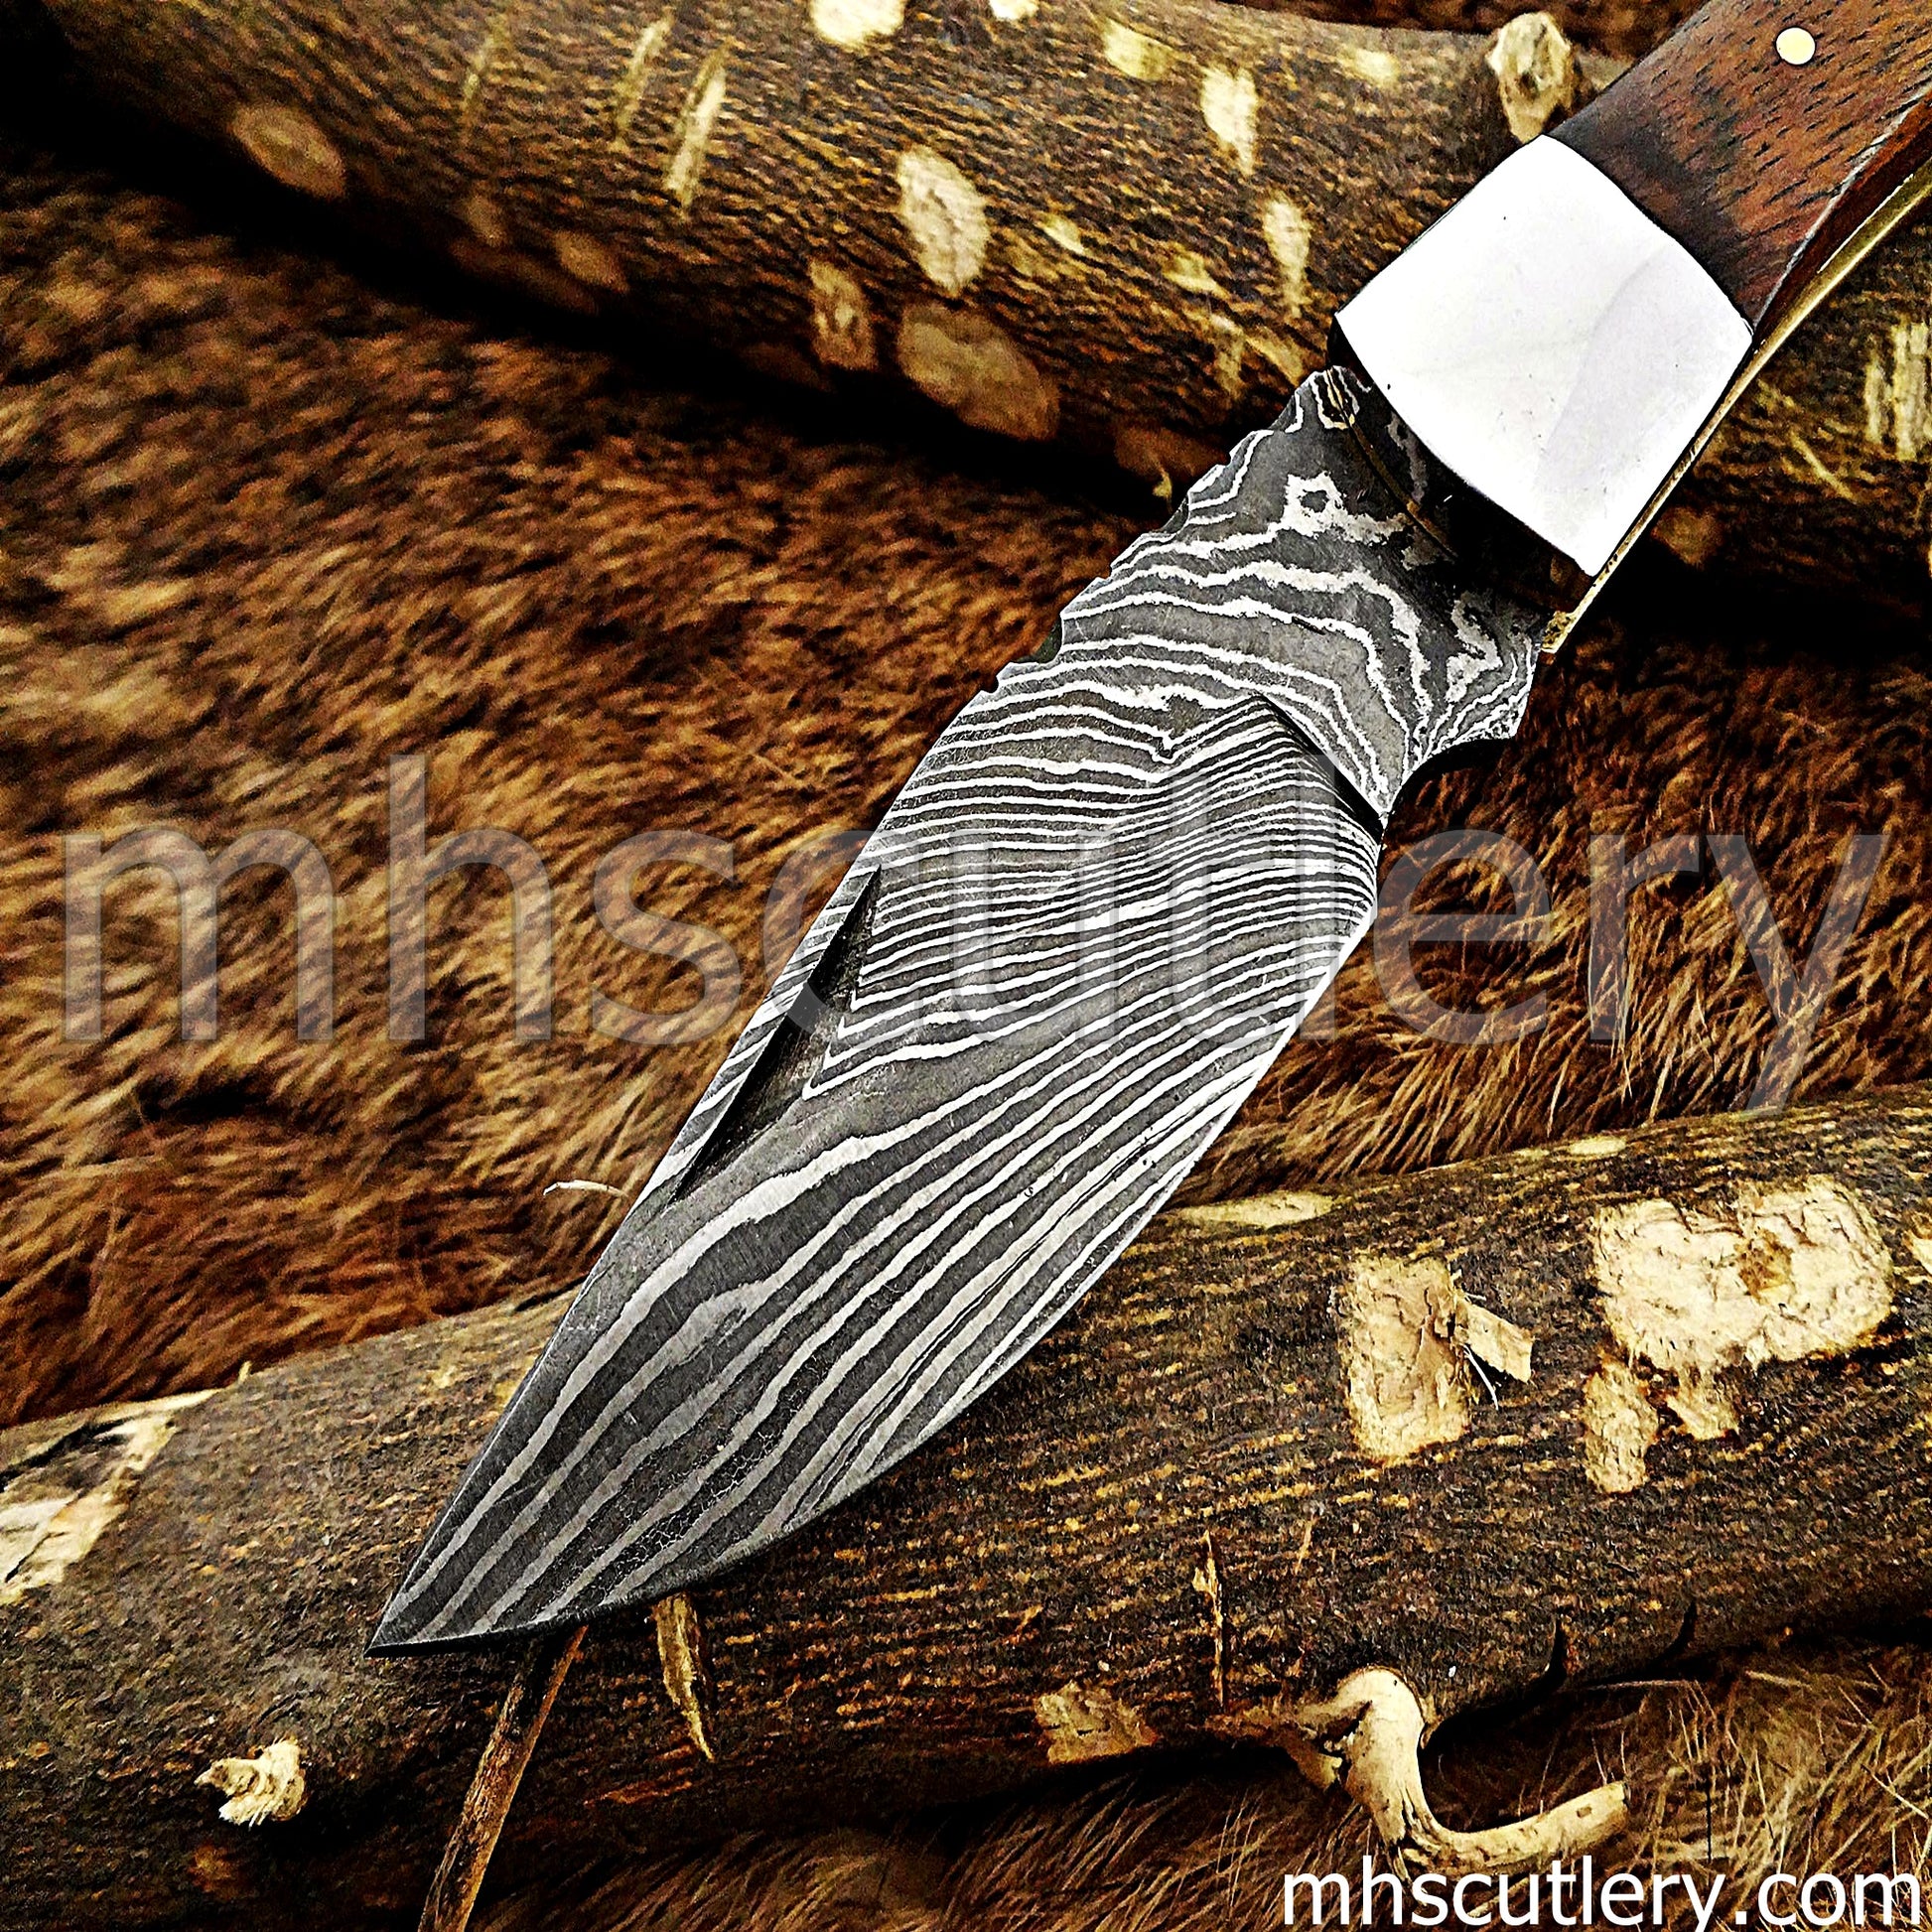 Custom Handmade Damascus Steel Folder Knife | mhscutlery